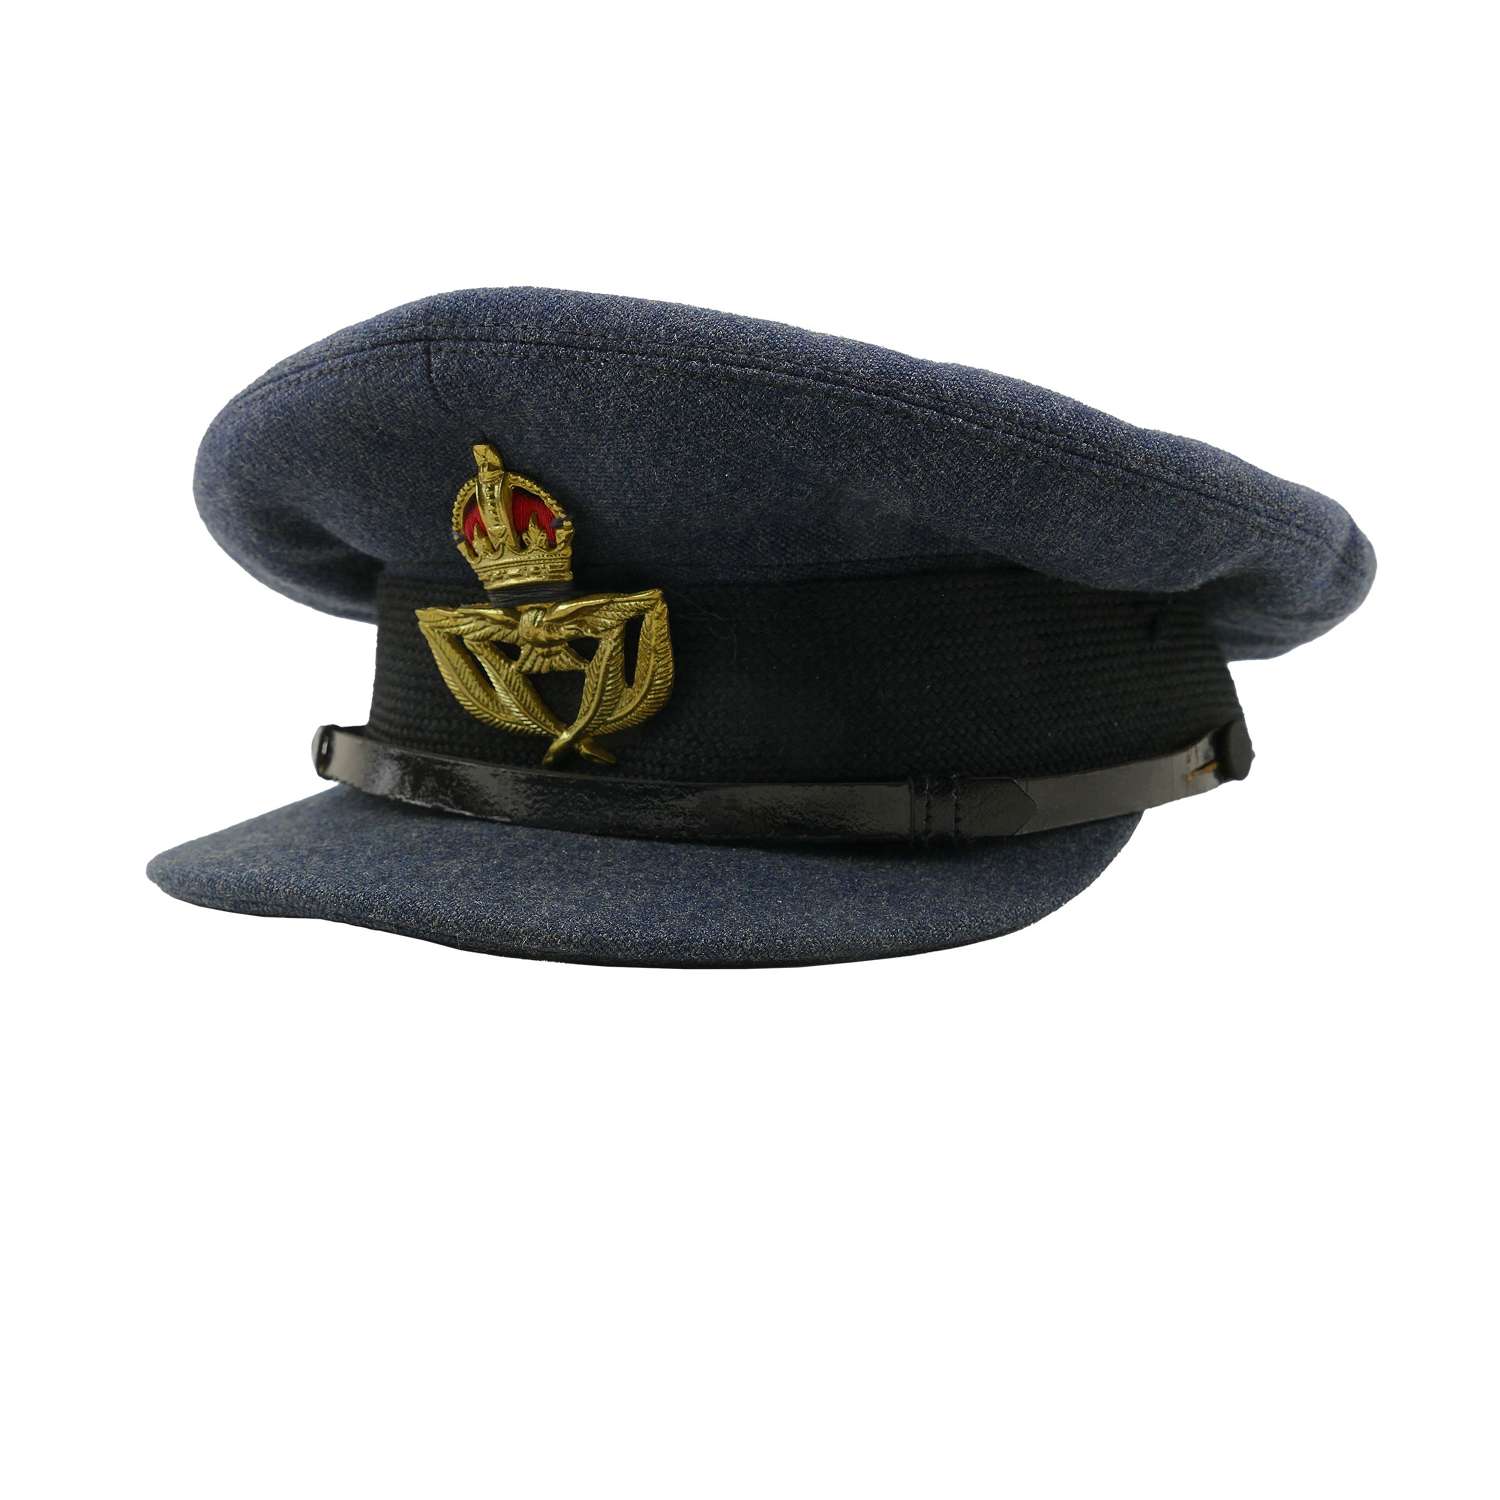 RAF warrant officer rank service dress cap - history